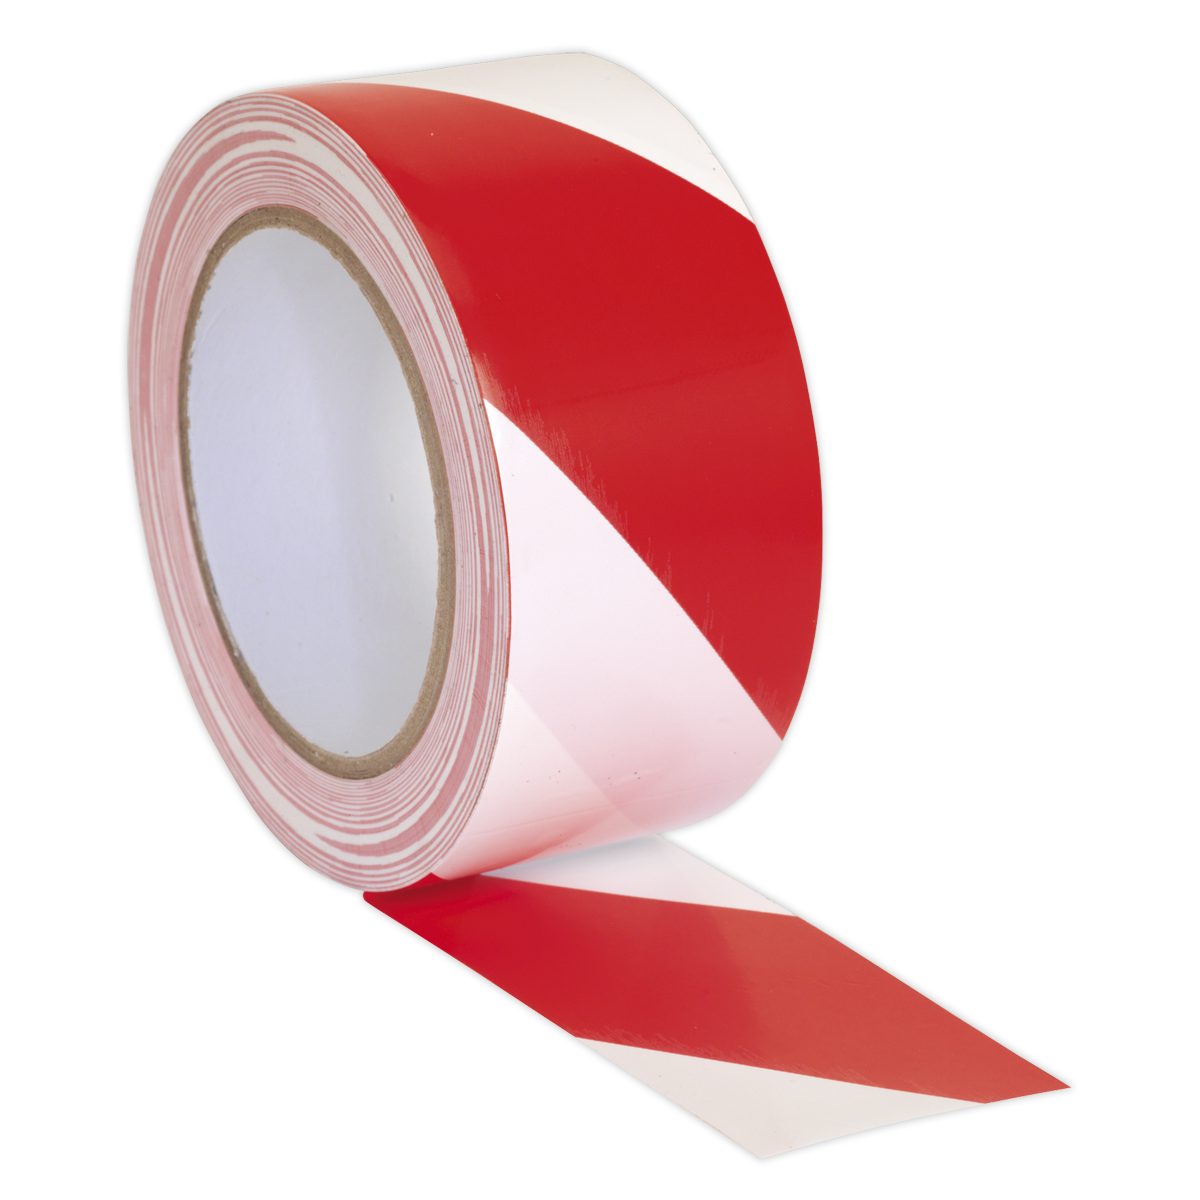 Primatel Adhesive Hazard Marking Red White Tape 50mm x 33m Pack of 1 